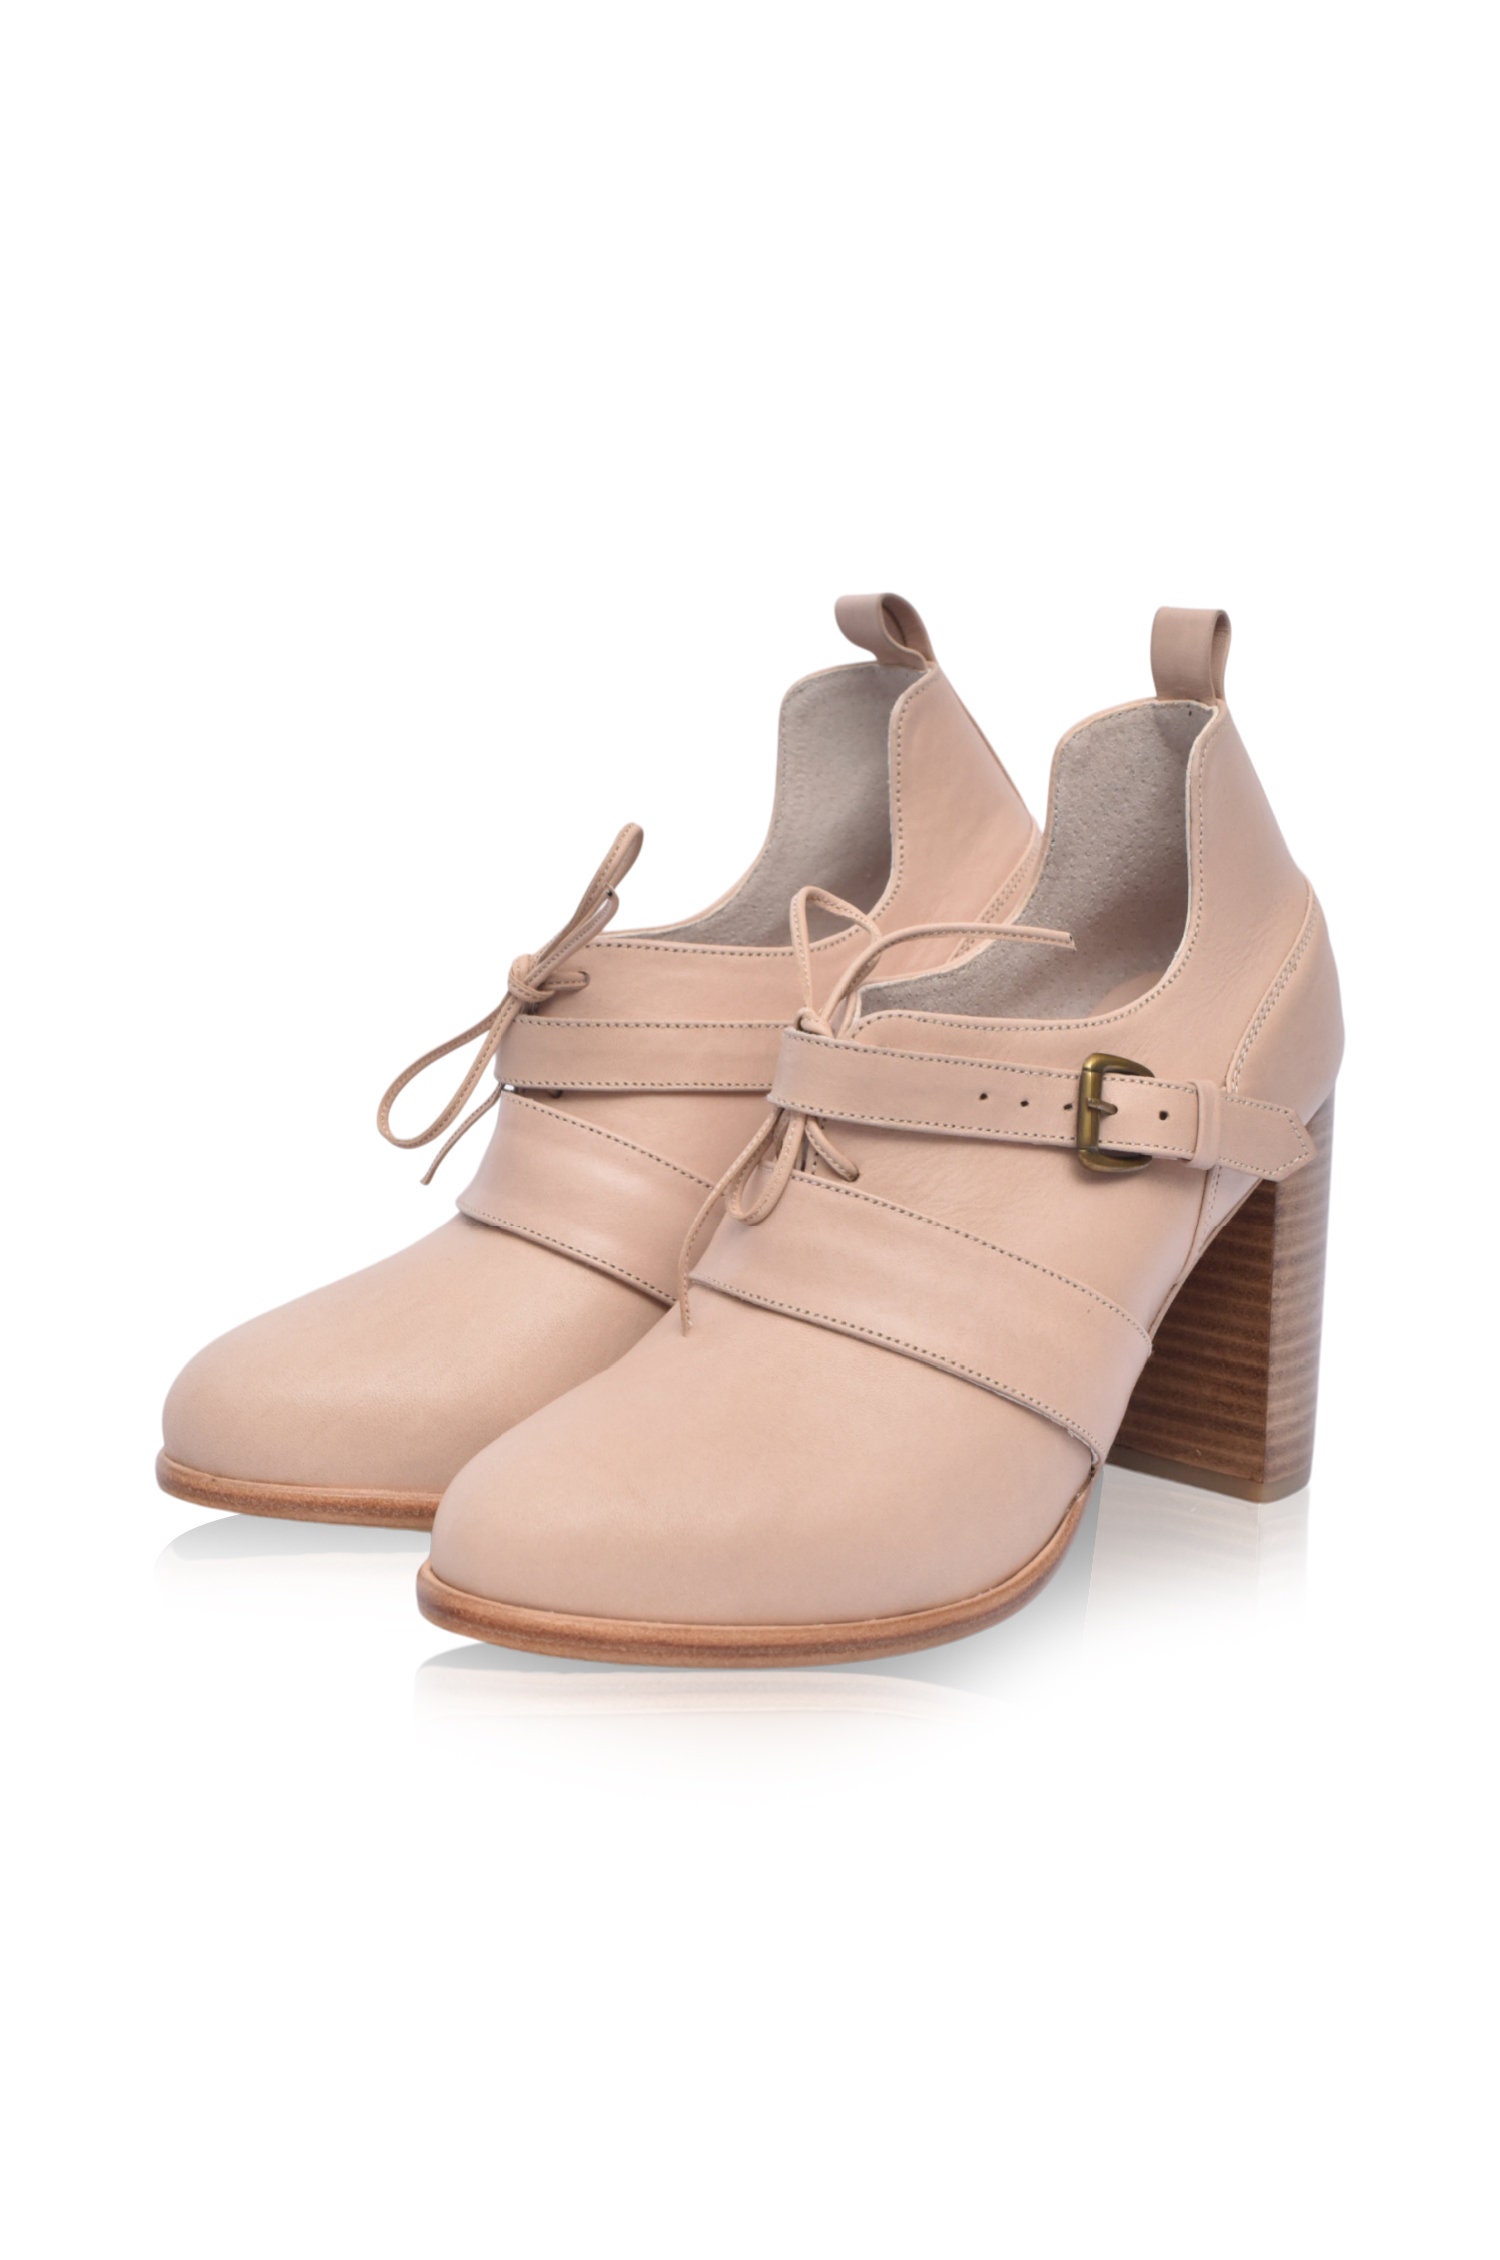 Josephine. Low Cut Schuhe/Damenschuhe High Heels Leder Oxfords Oxford Pumps Lace Up Boots von BaliELF